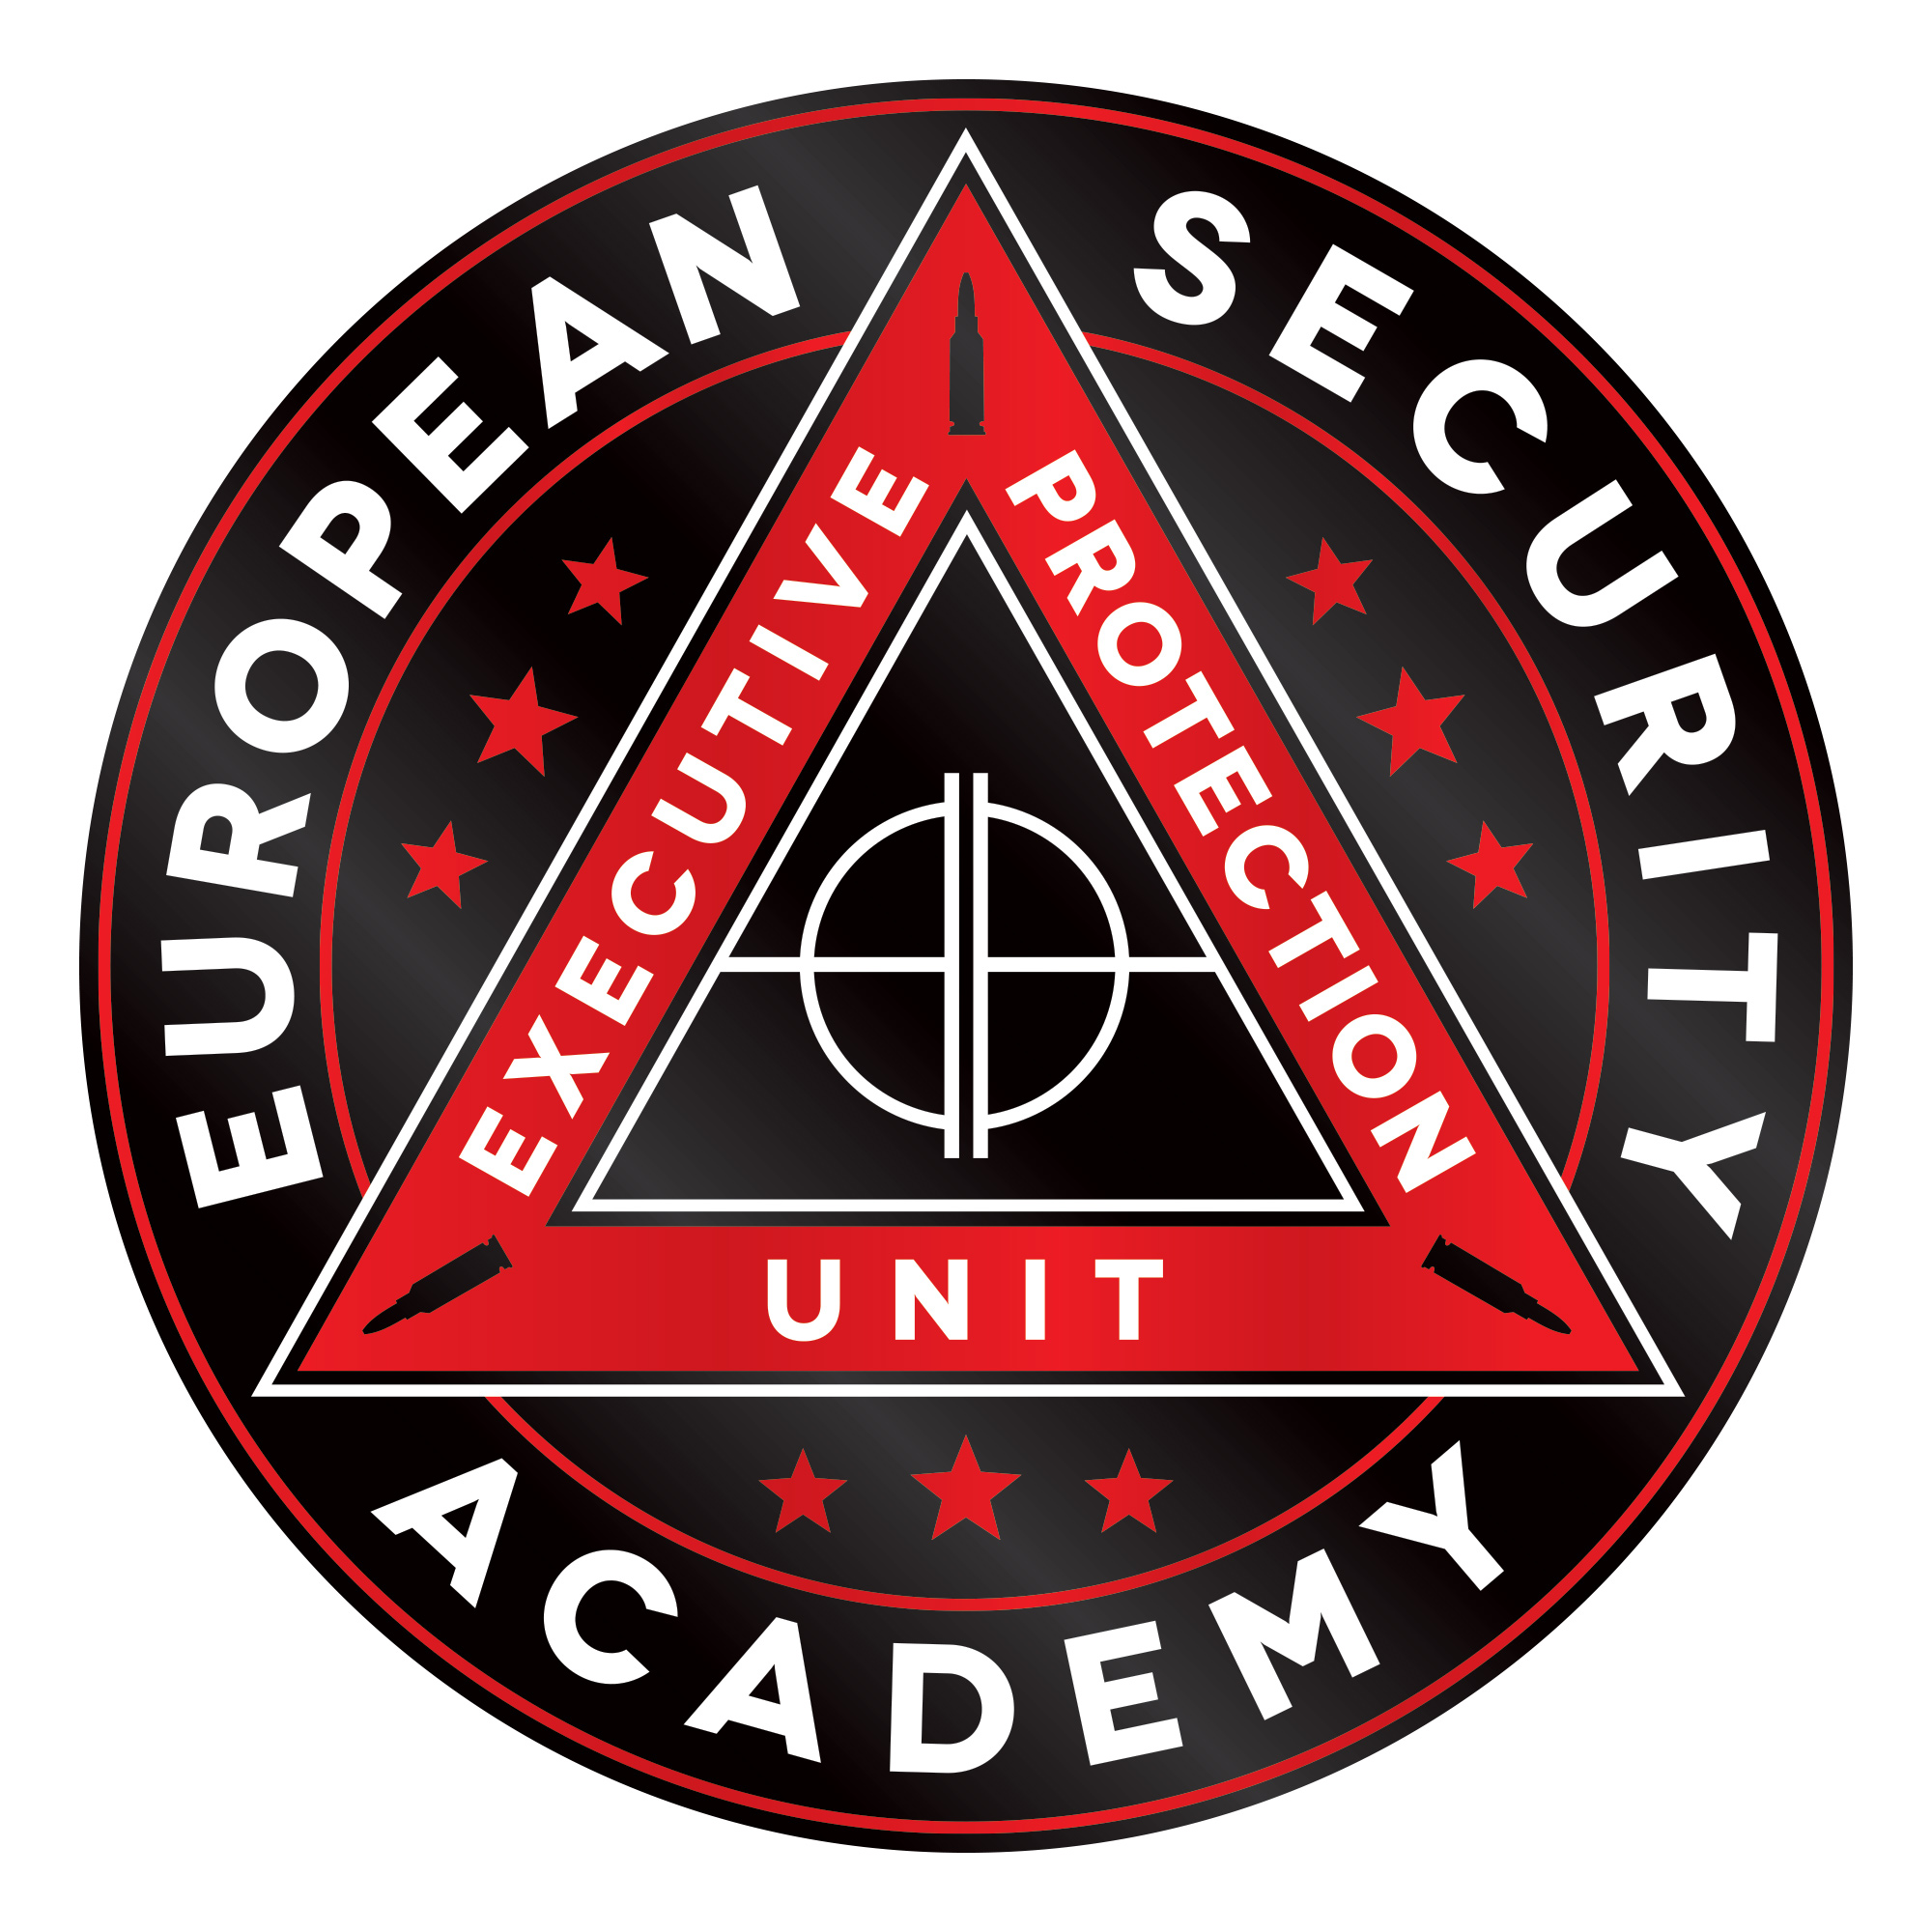 European Security Academy